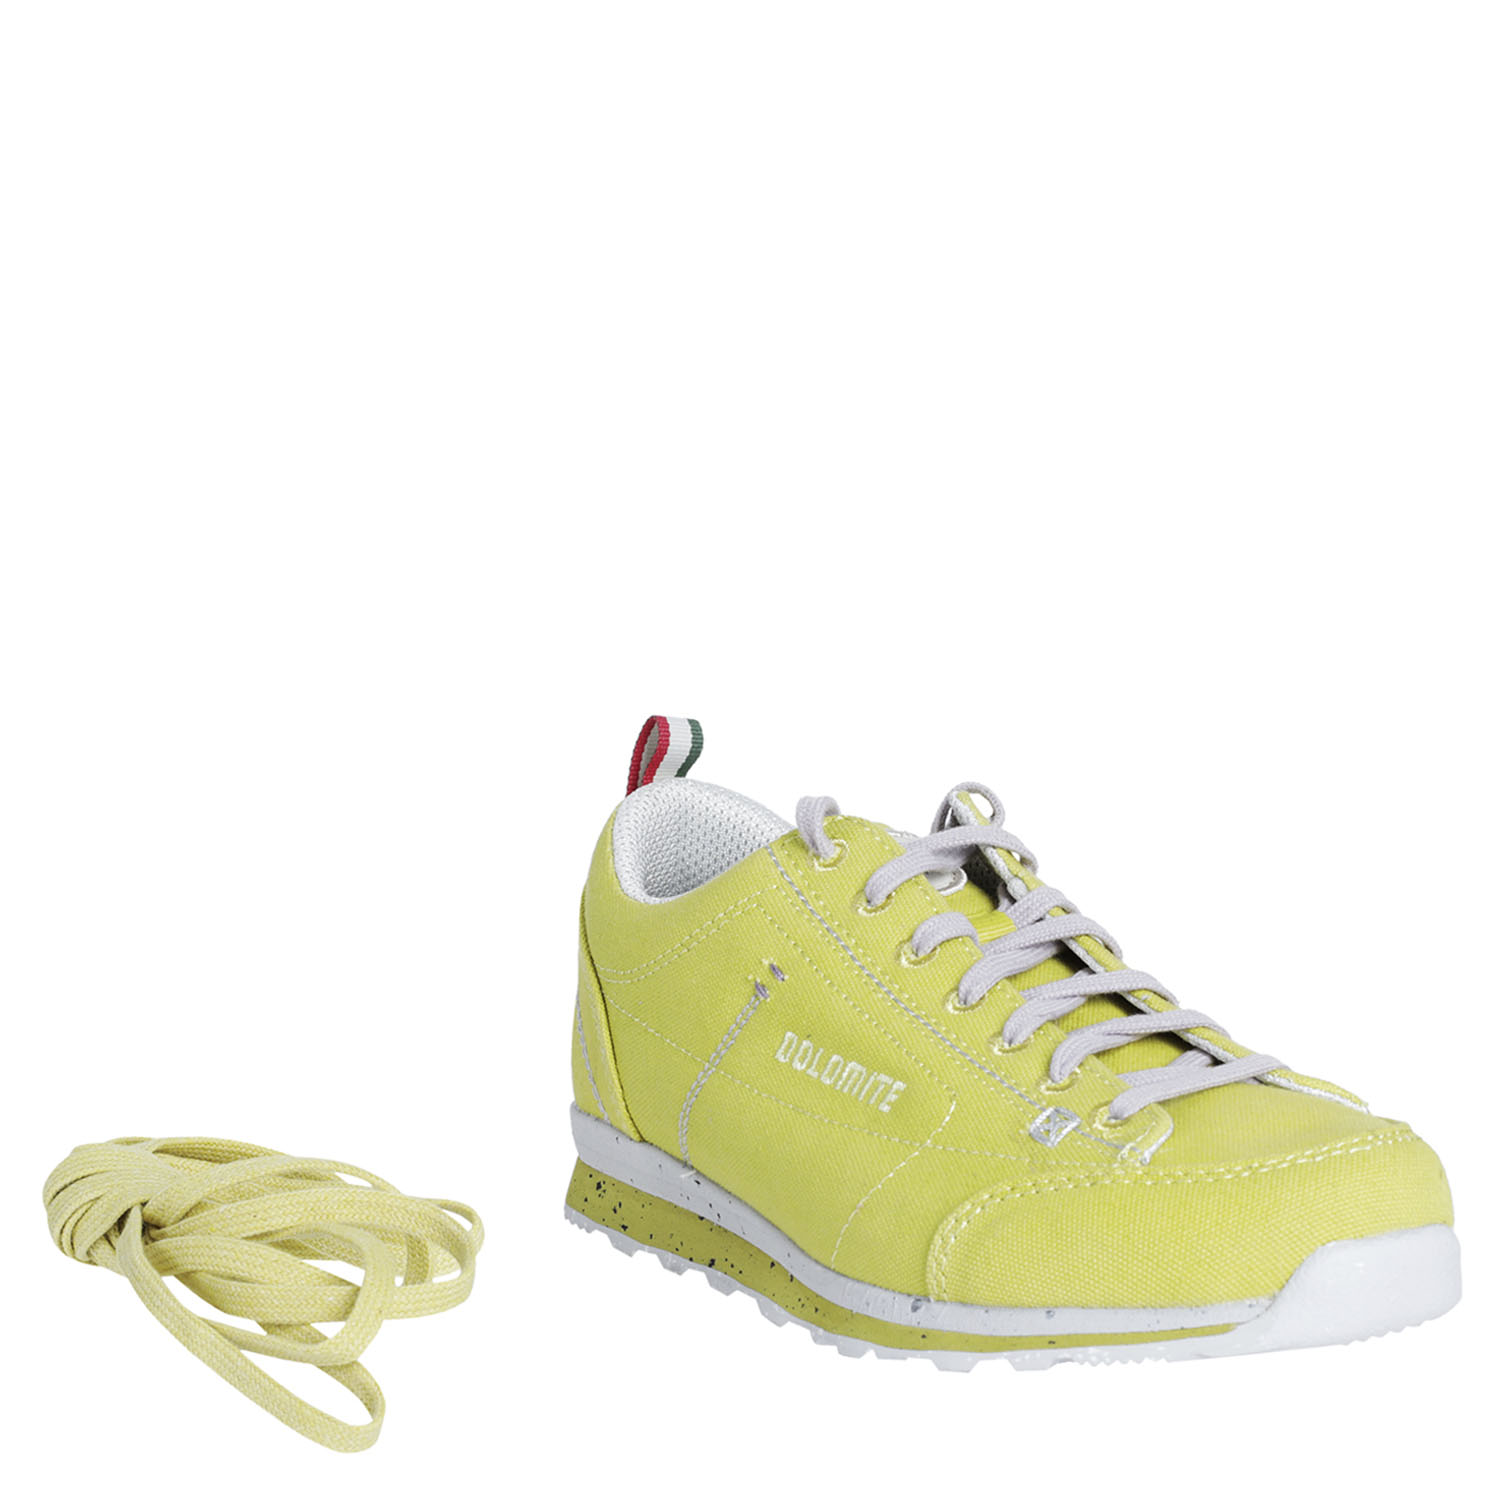 Ботинки Dolomite 54 Lh Canvas Evo W's Citron Yellow